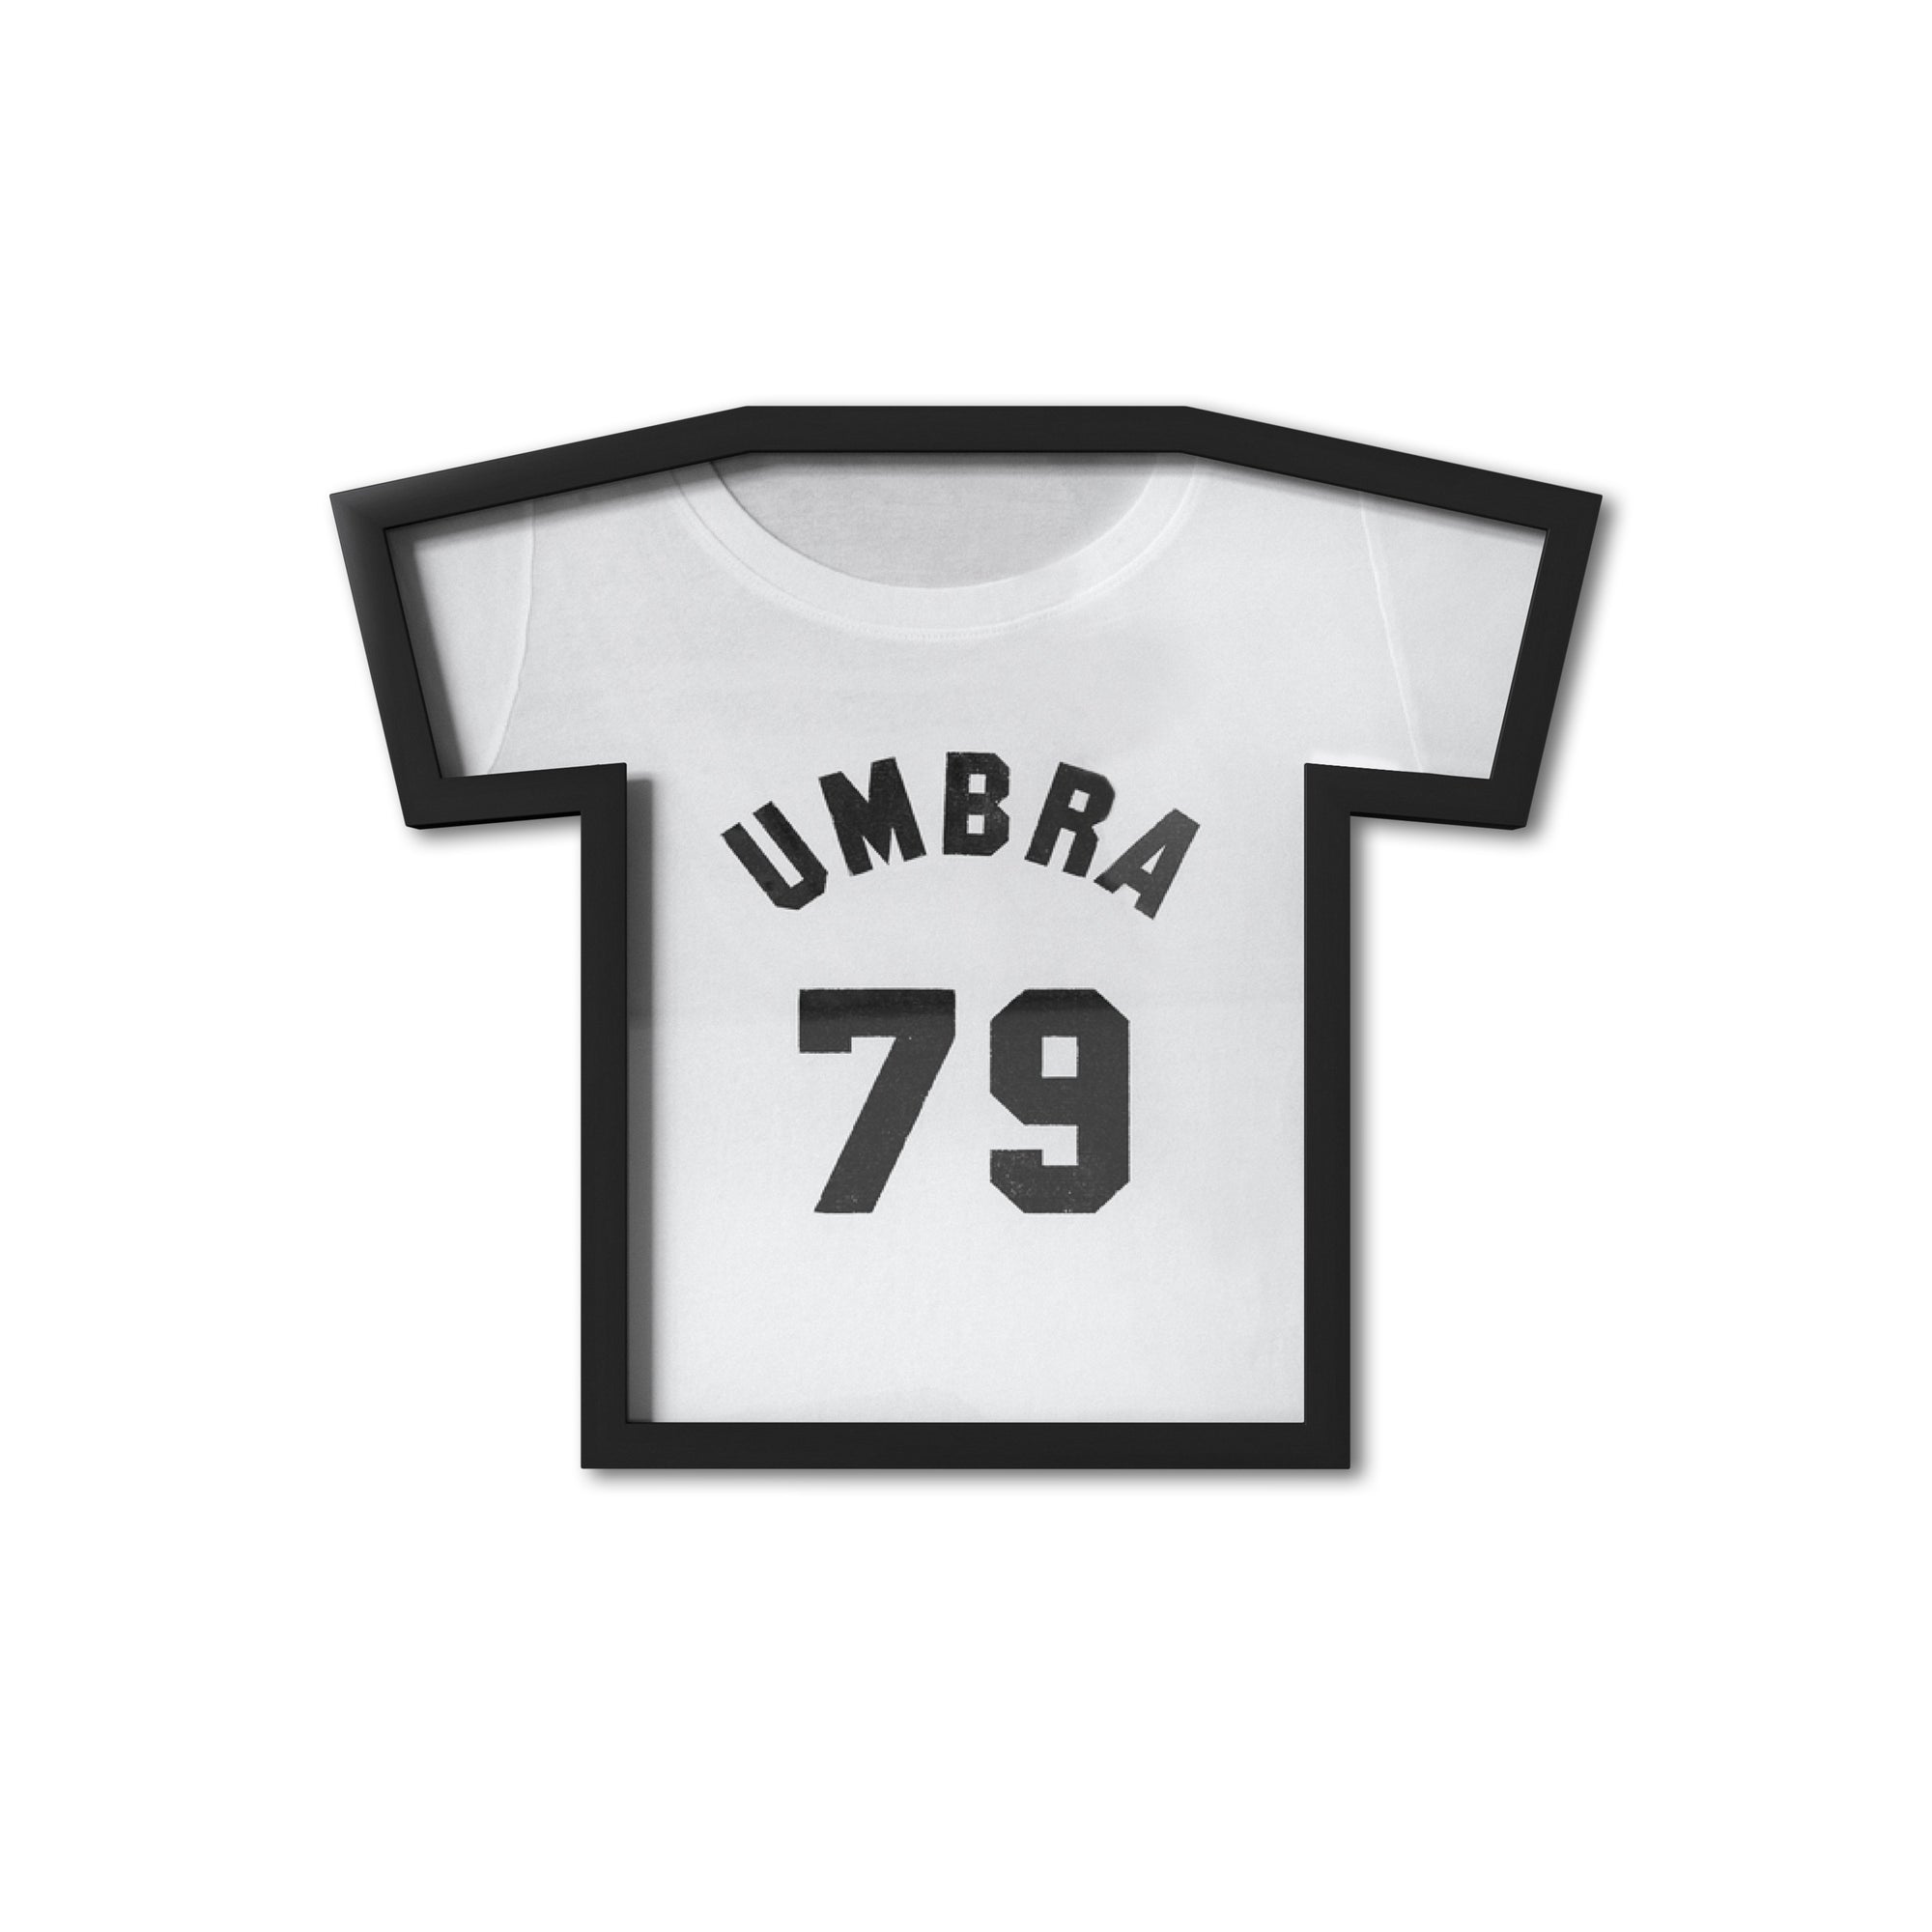 Umbra T-Frame T-Shirt Display (Black)